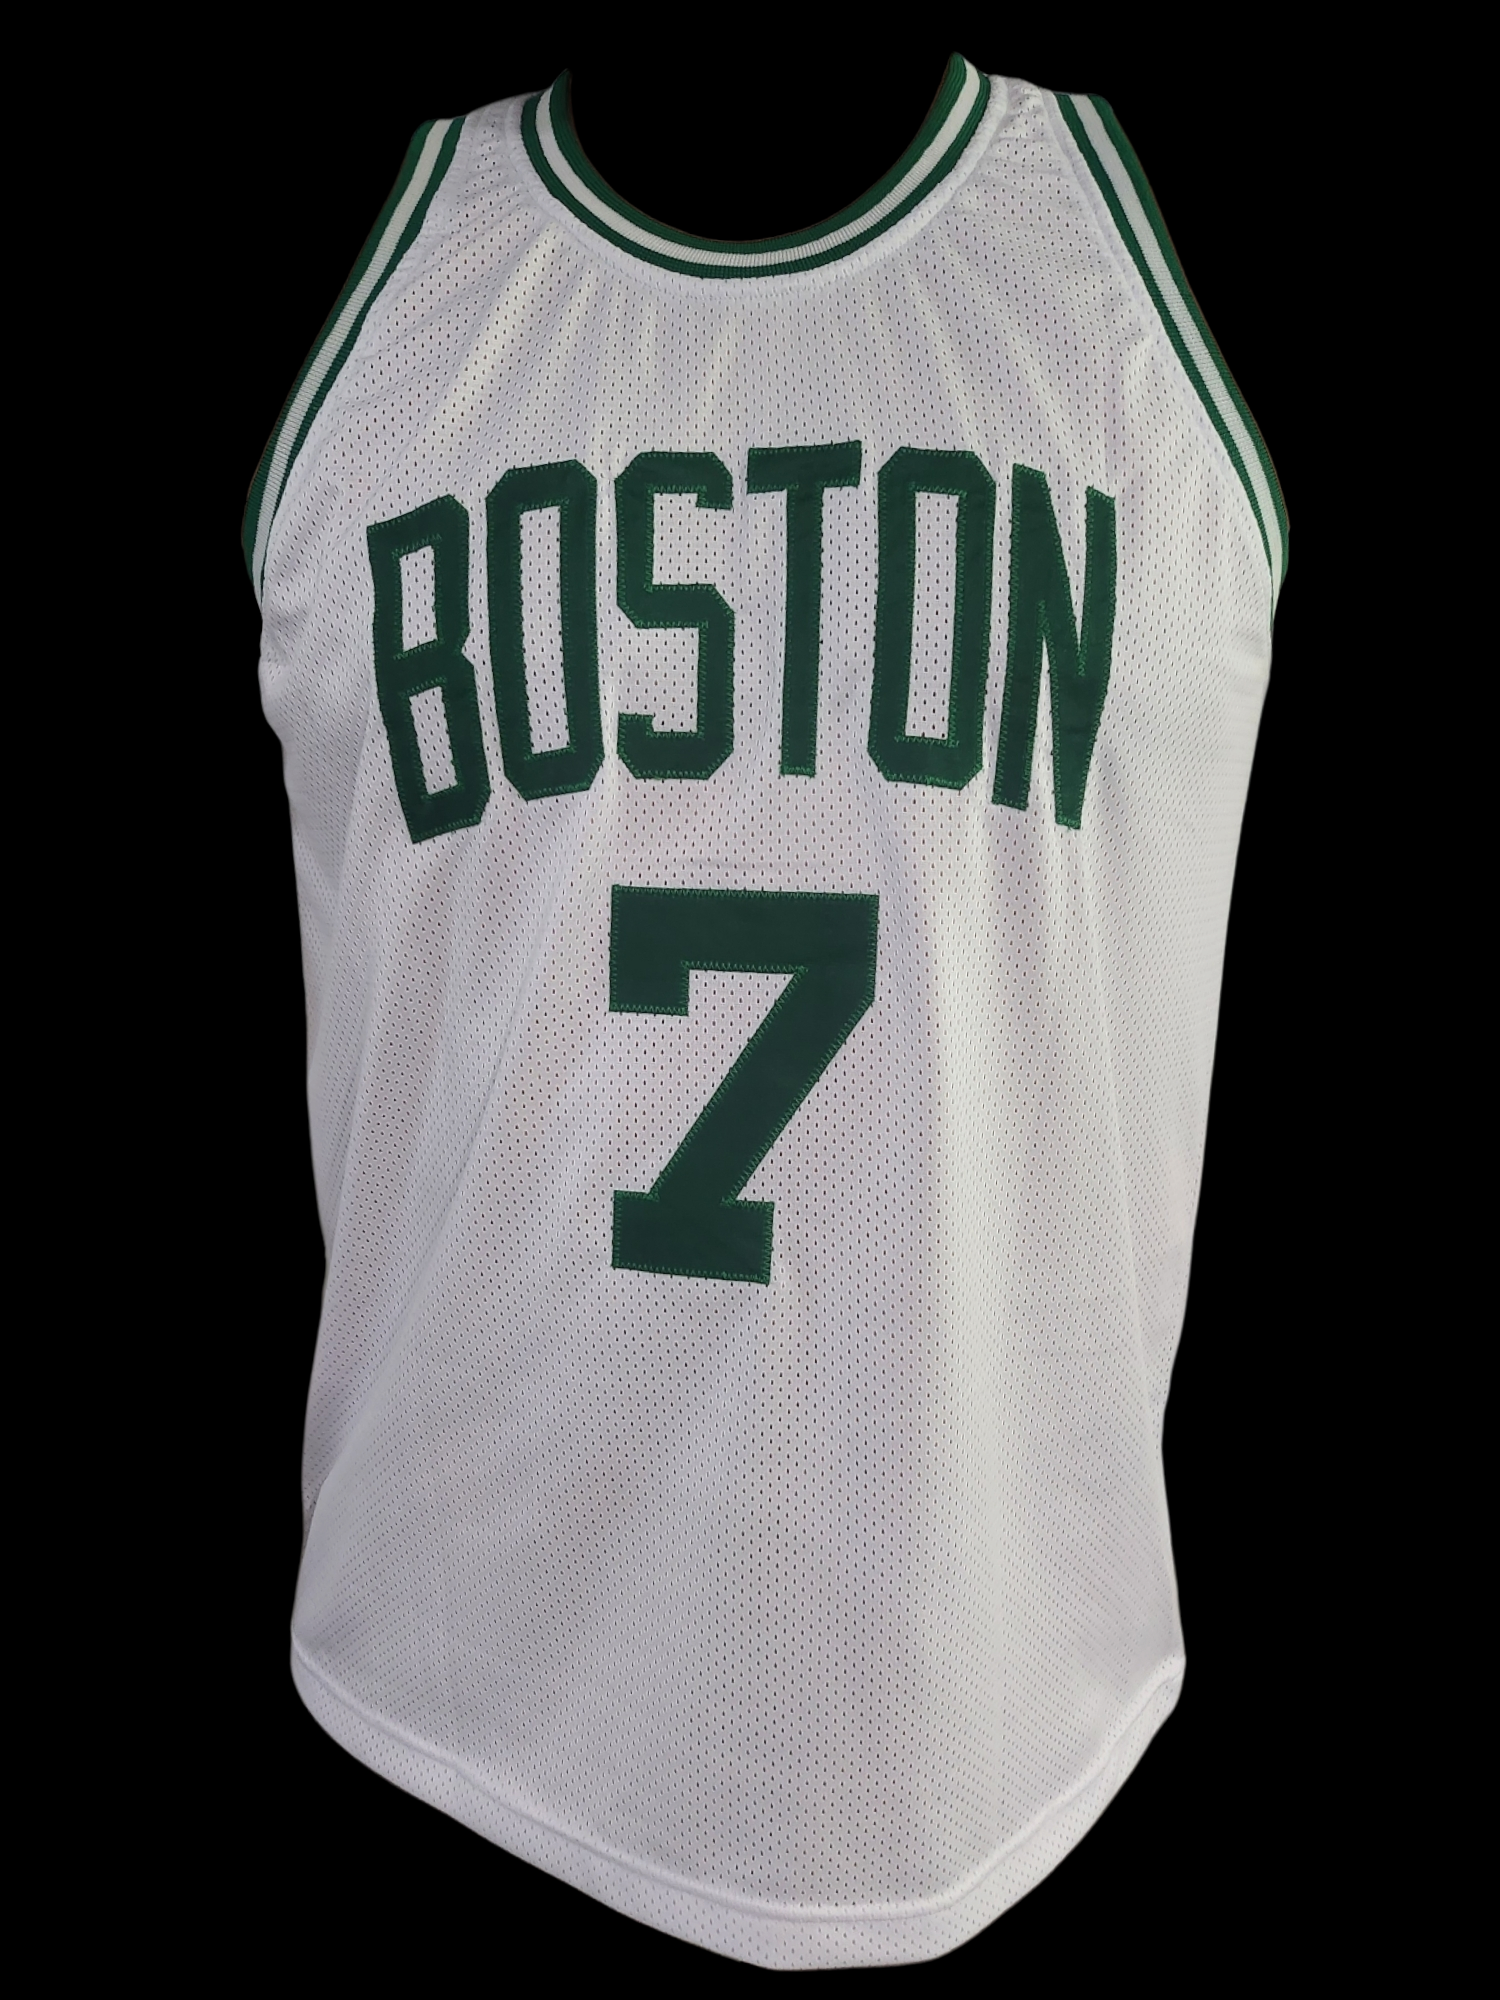 Dee Brown Autographed Boston Celtics Jersey with Inscription "91 Slam Dunk Champ!" Boston Celtics